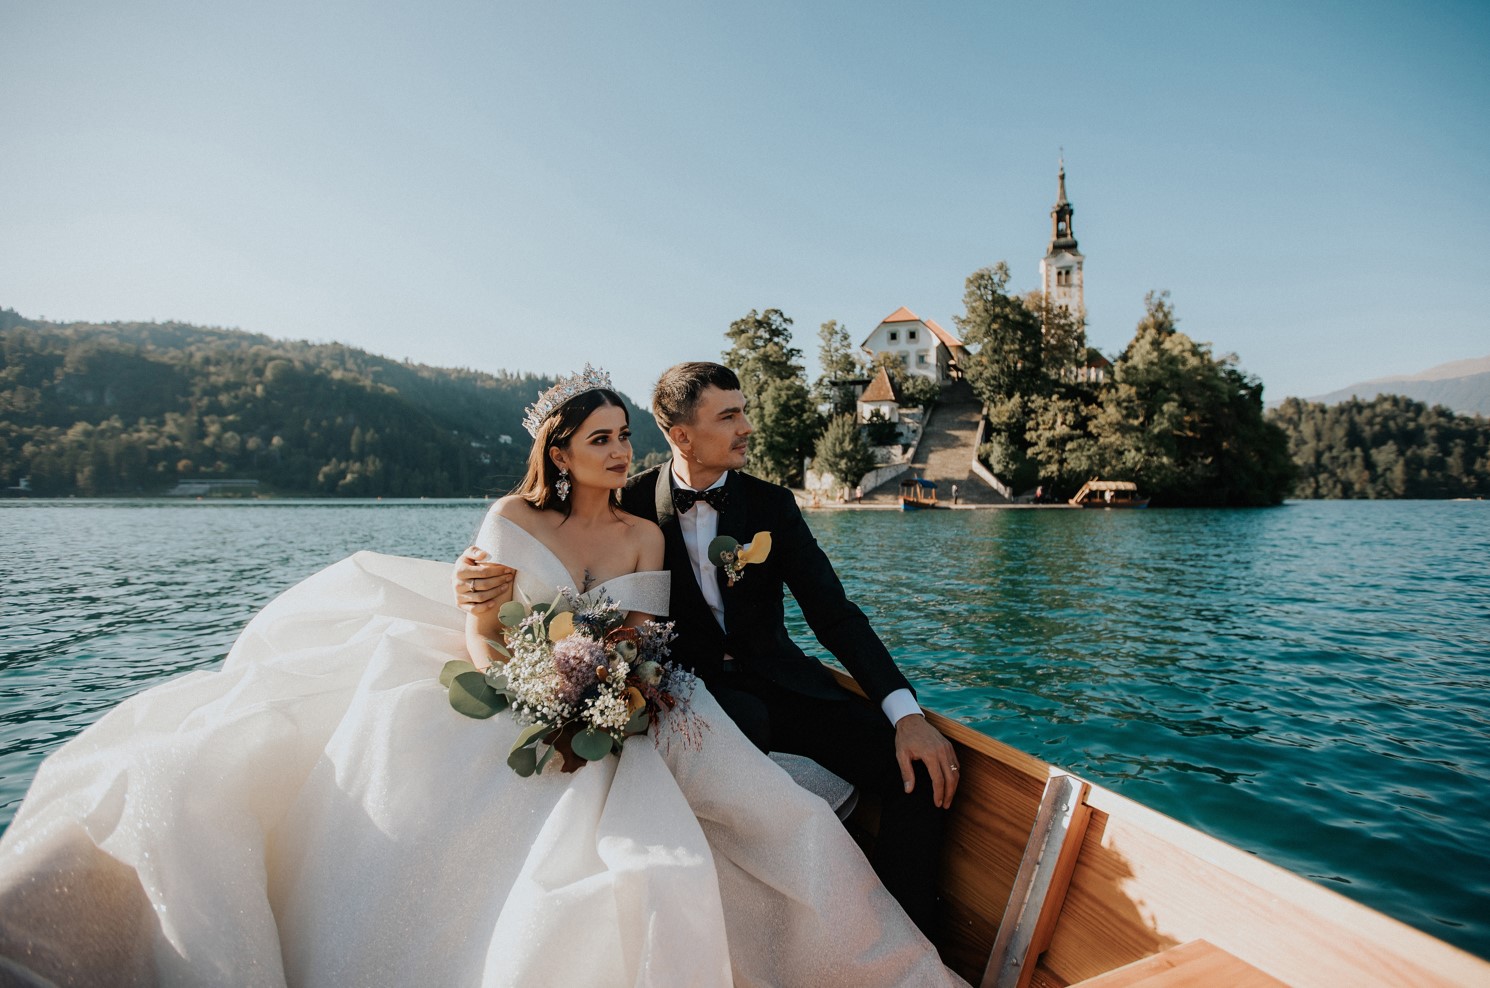 Poroka Bled jezero